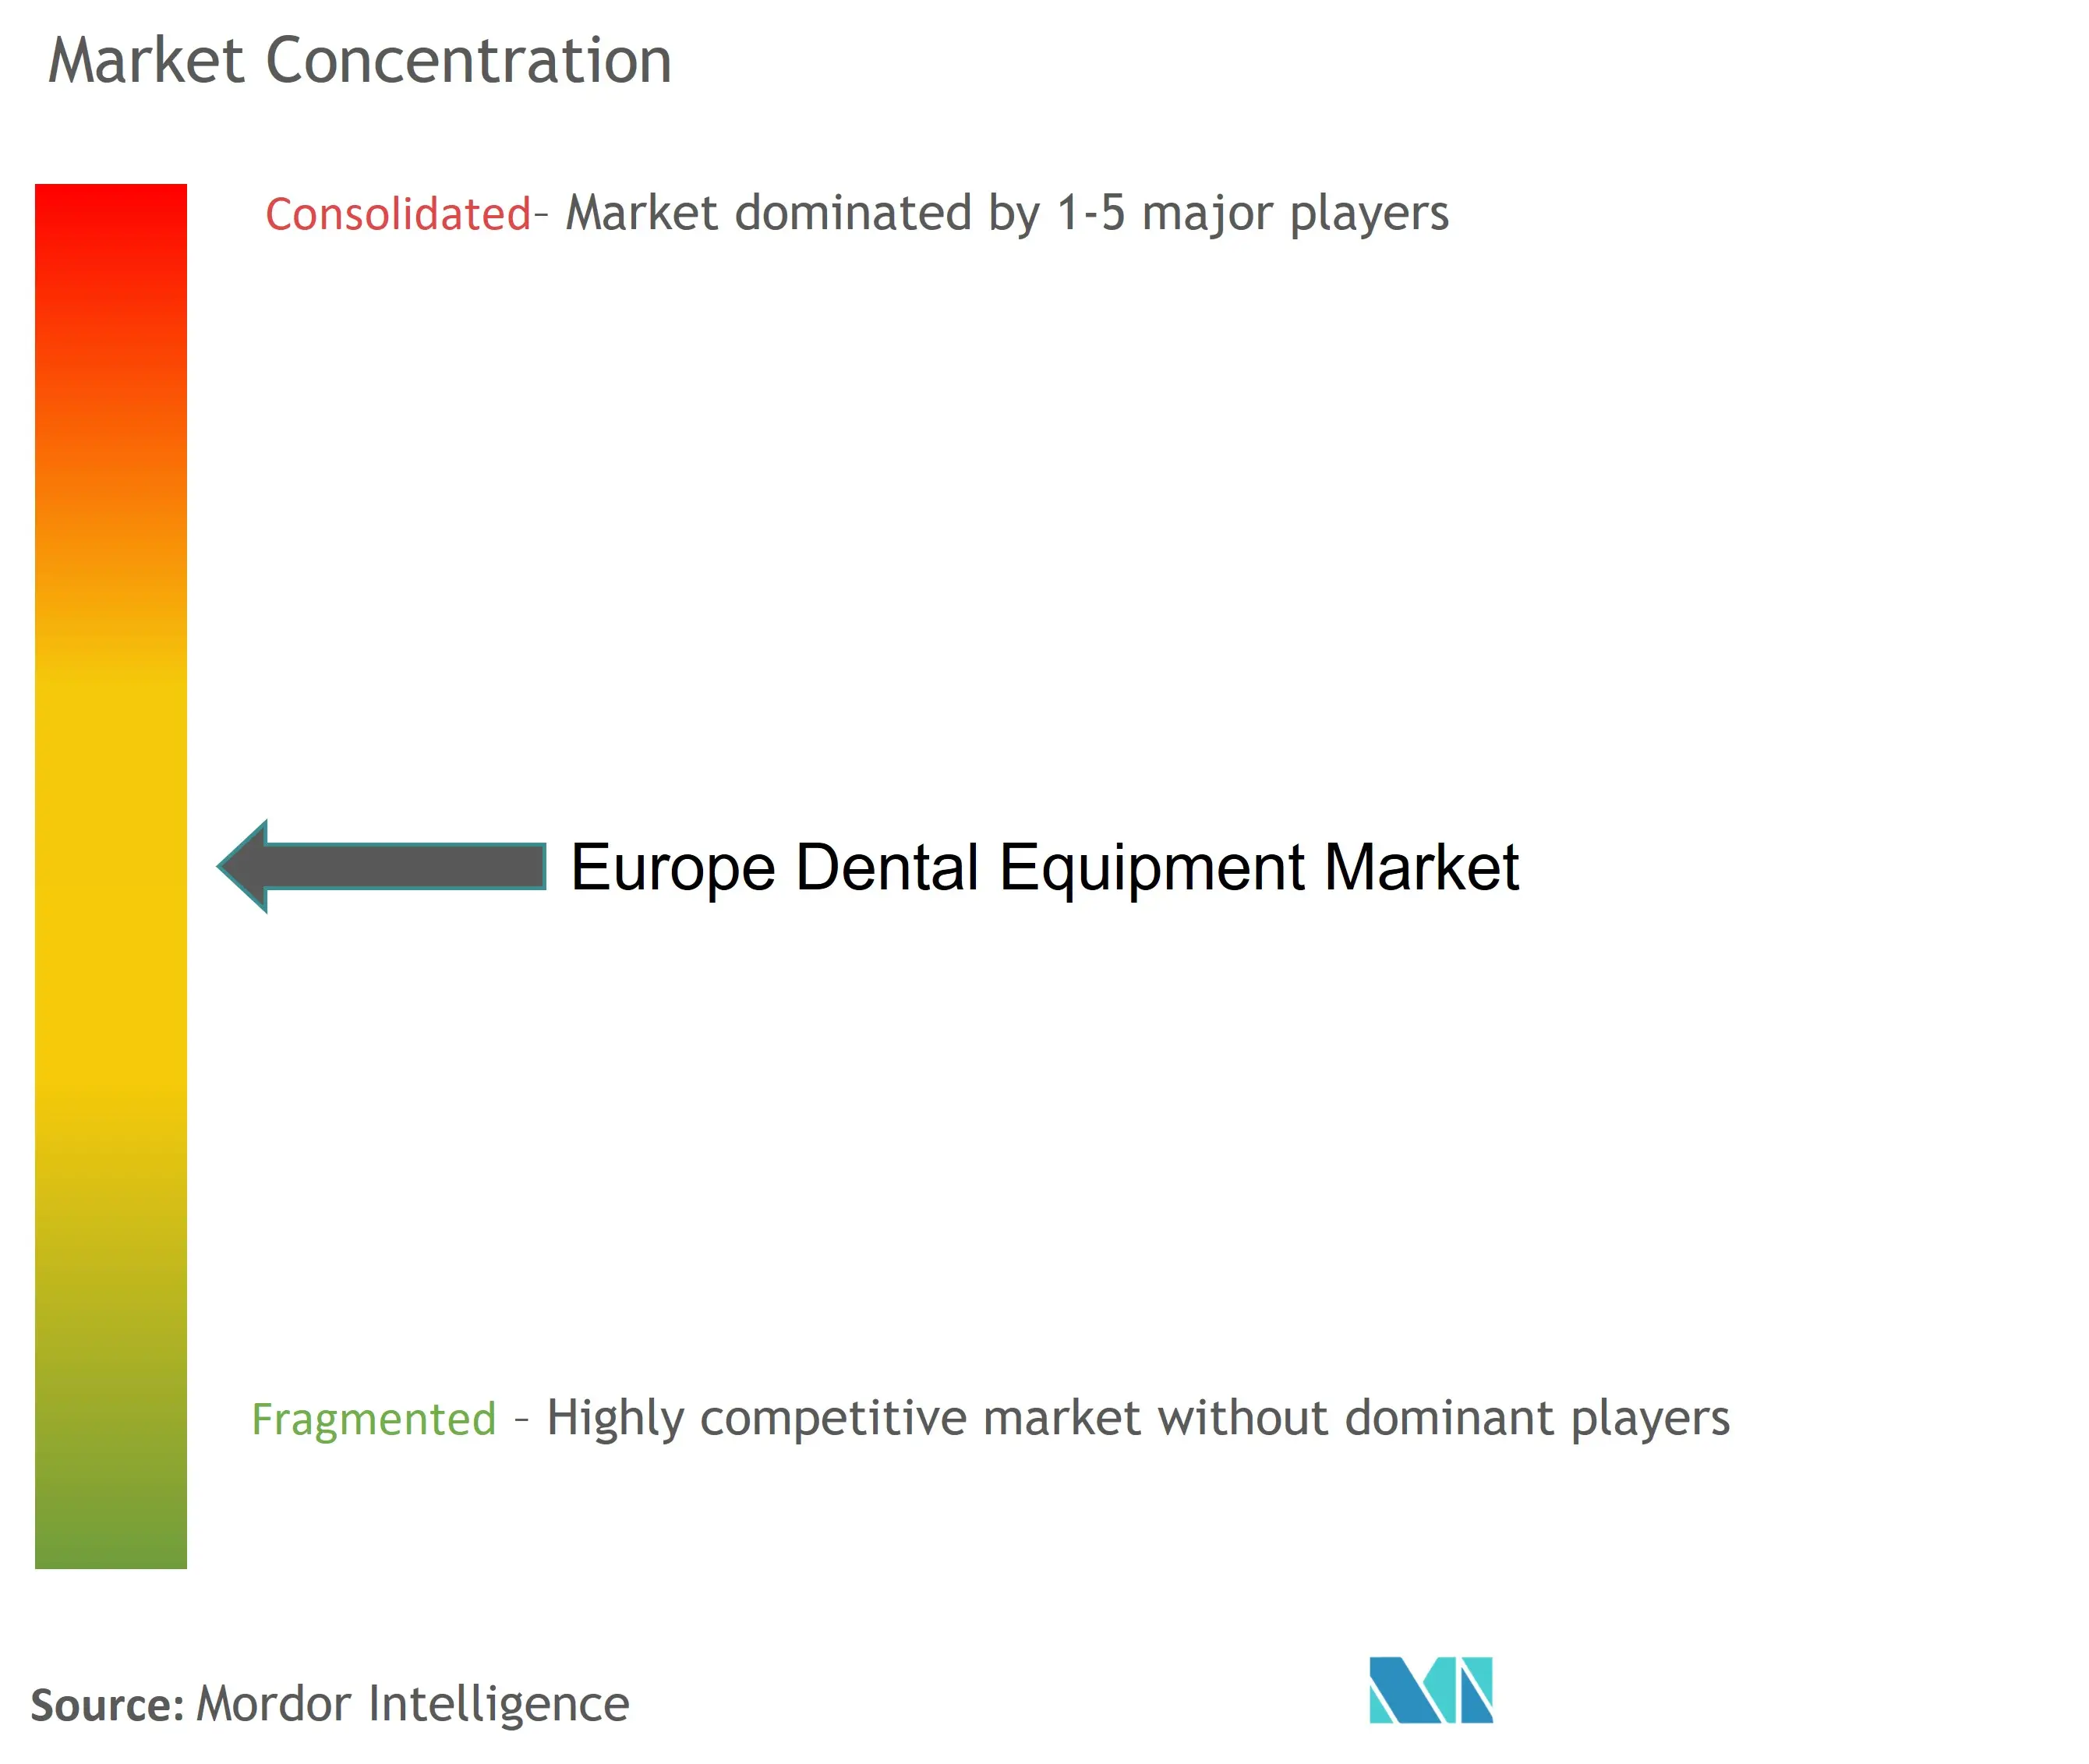 Europe Dental Equipment Market Concentration